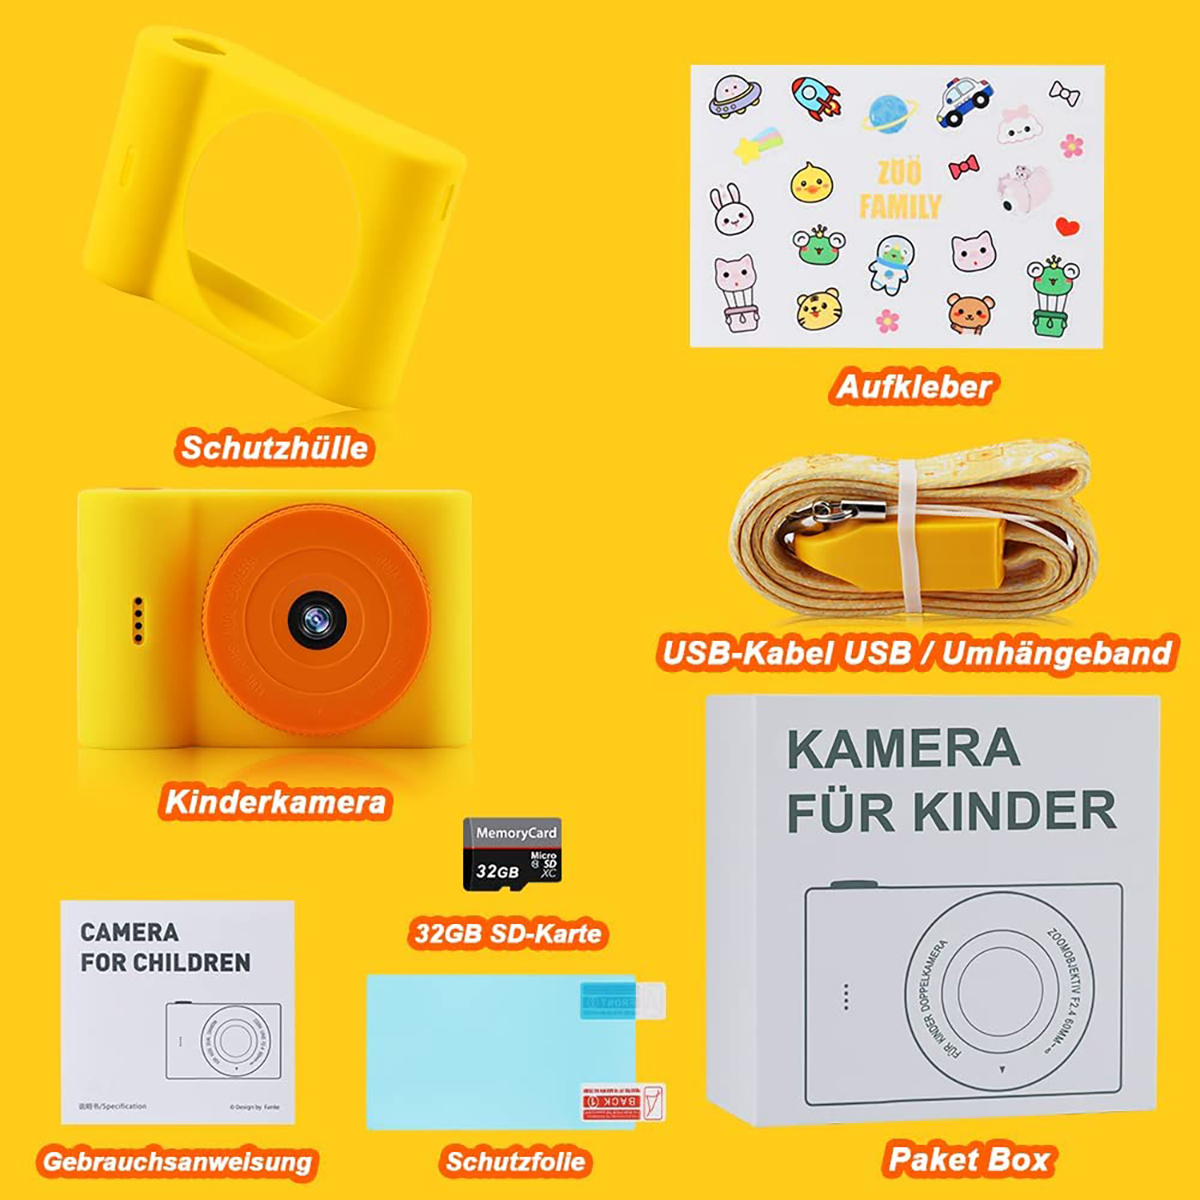 FINE LIFE PRO SD-Karte DigitalKamera Kinderkamera Gelb- Fotokamera,32GB Kinderkamera,48MP,1080P,WiFi